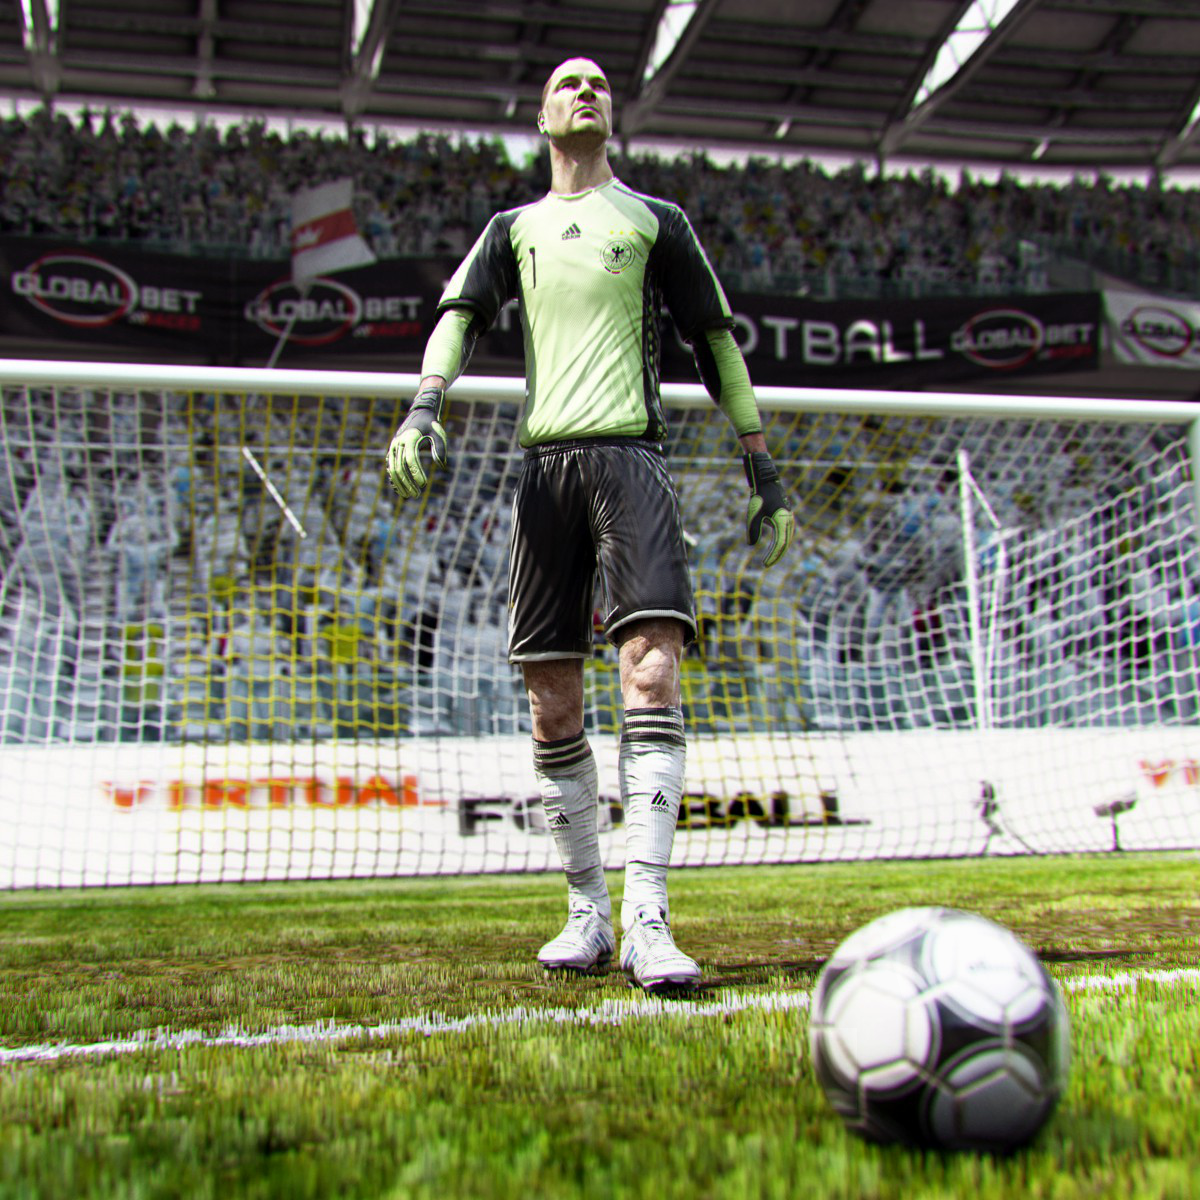 Virtual Sports Games by Global Bet Virtual Football Game